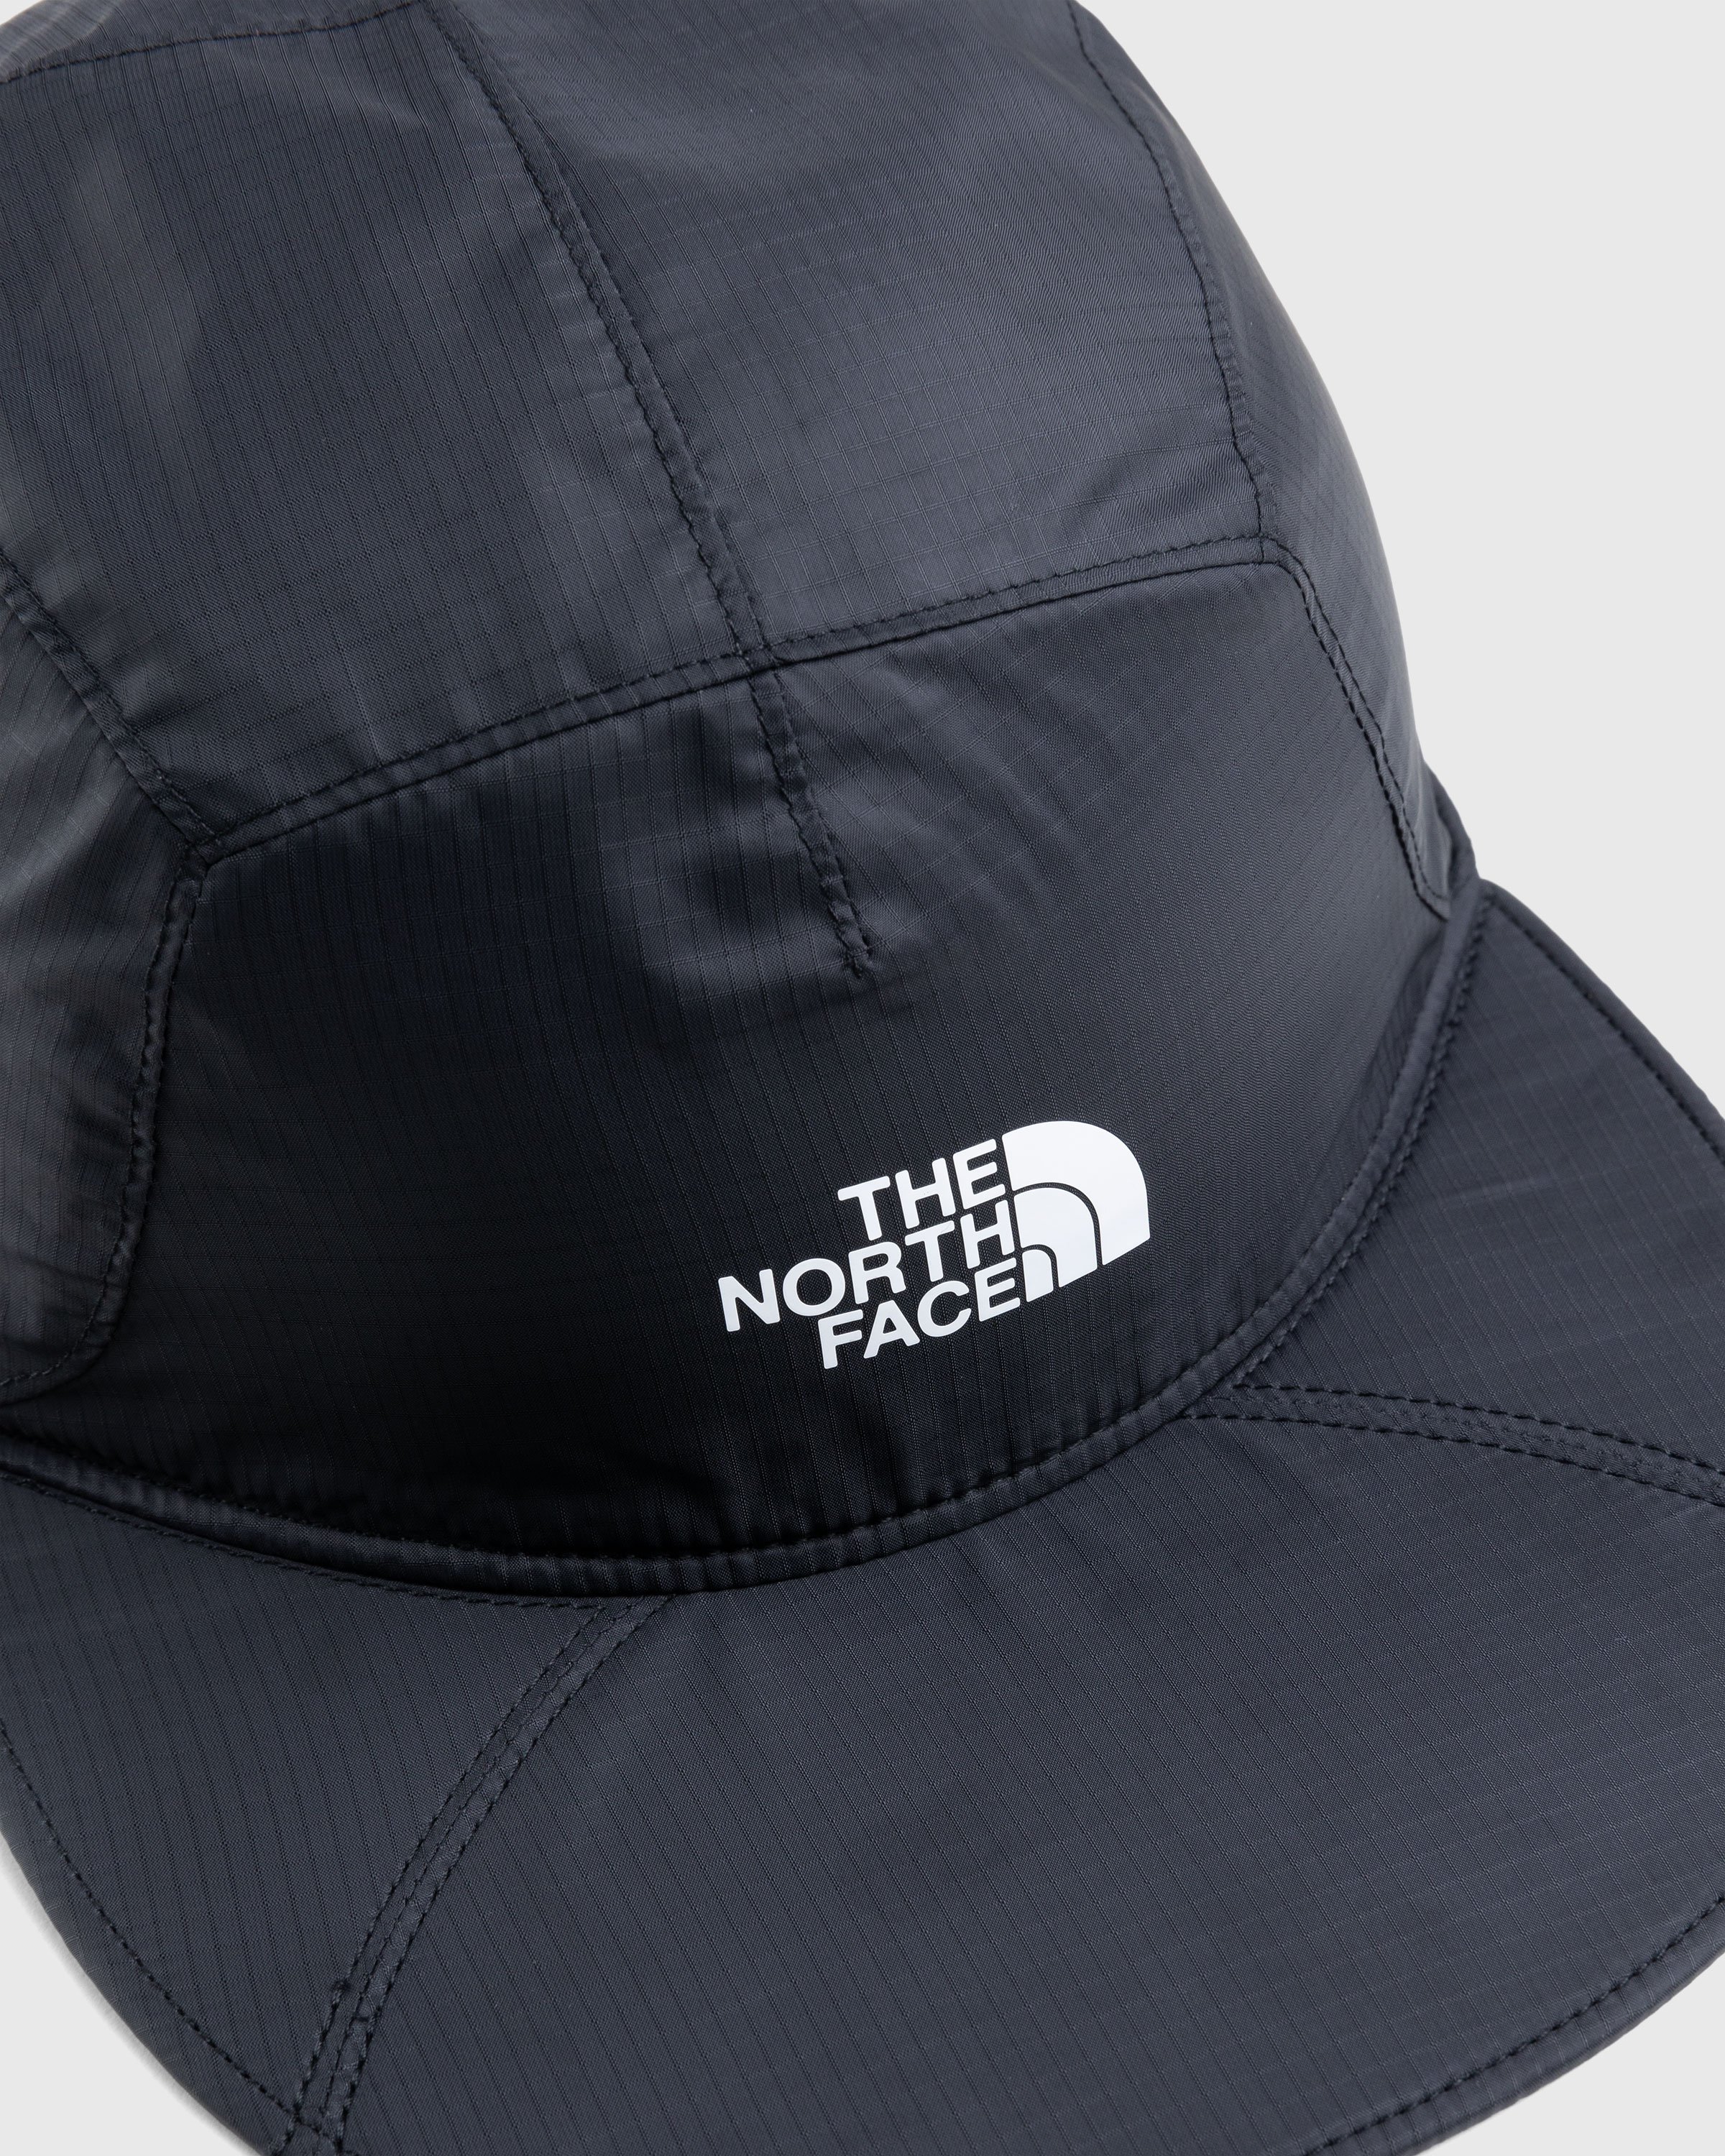 The North Face - ‘92 Retro Cap Black - Accessories - Black - Image 5